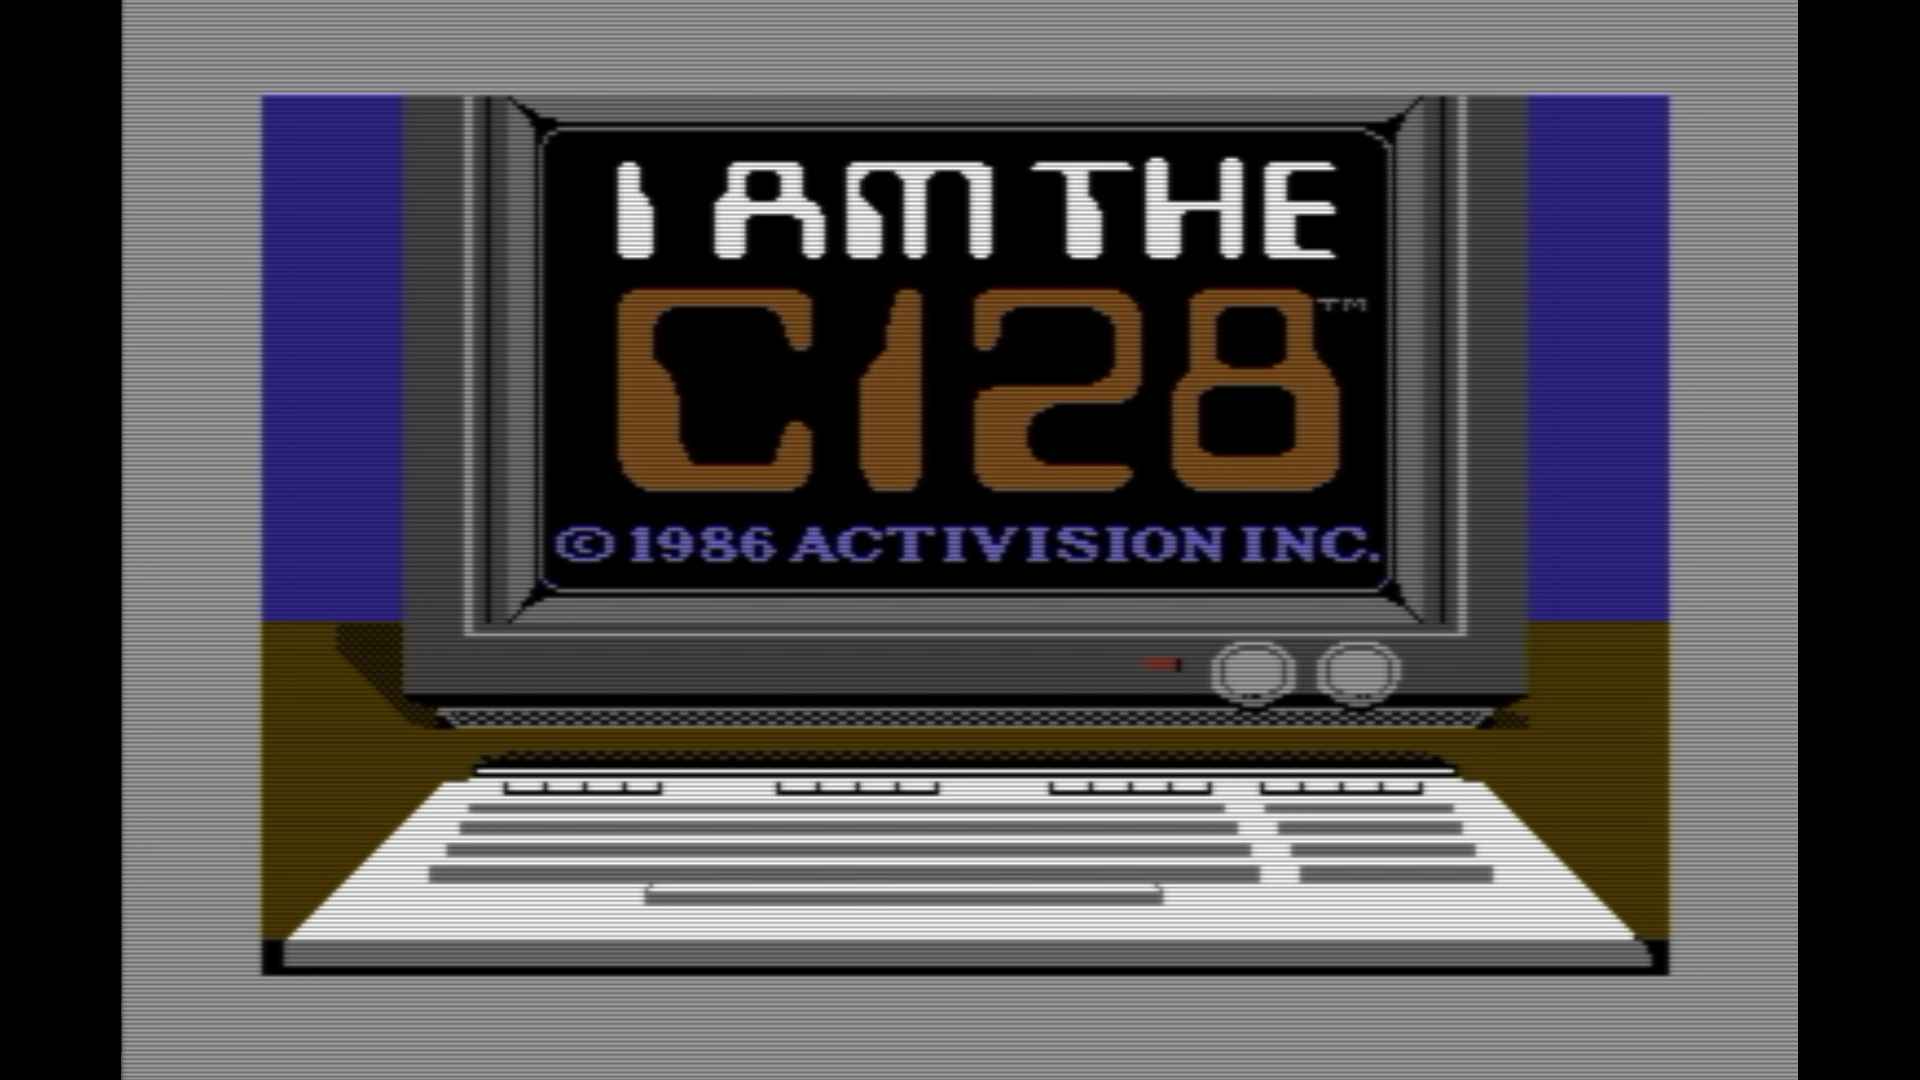 I am the C128 demo